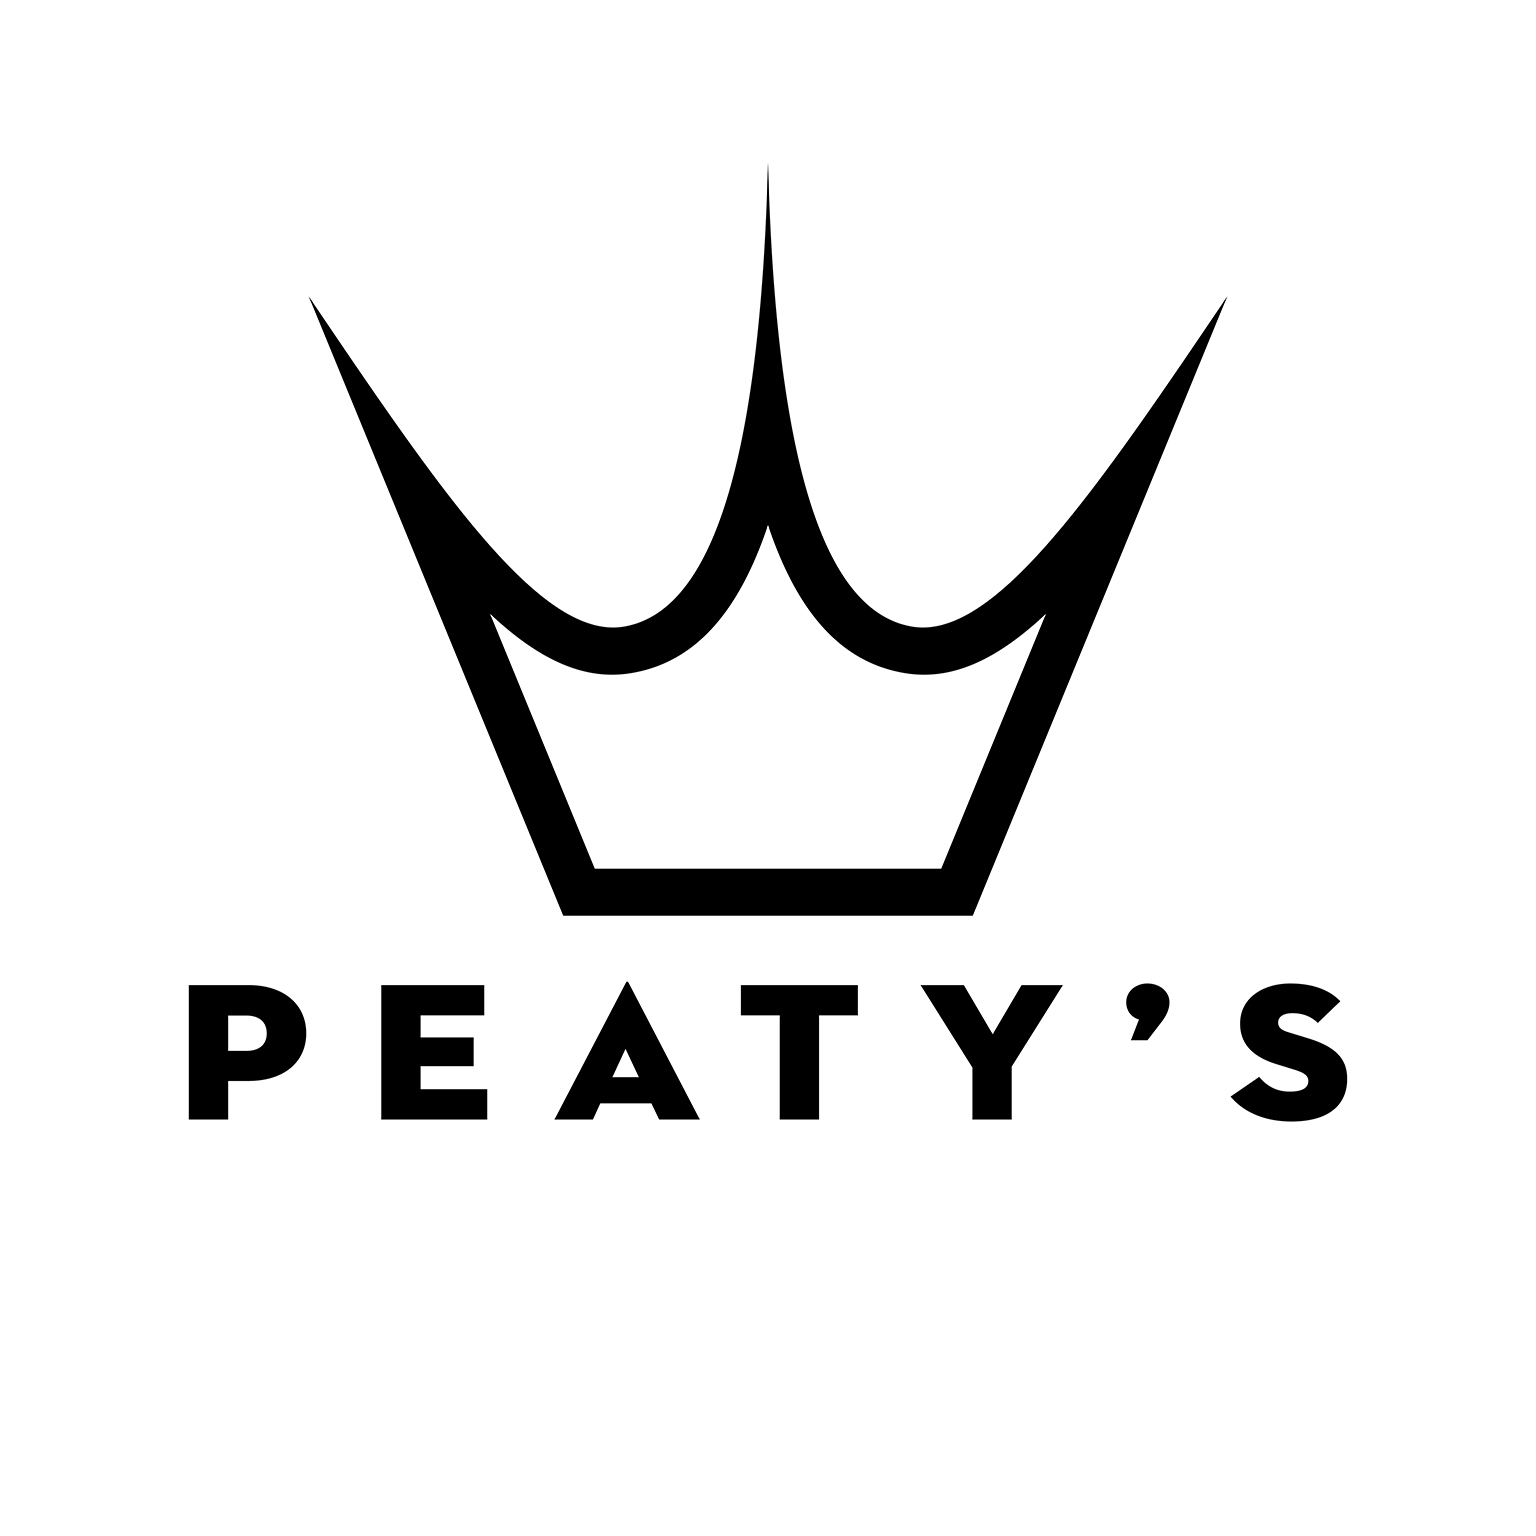 Peaty’s (ピーティーズ)LOGO Image